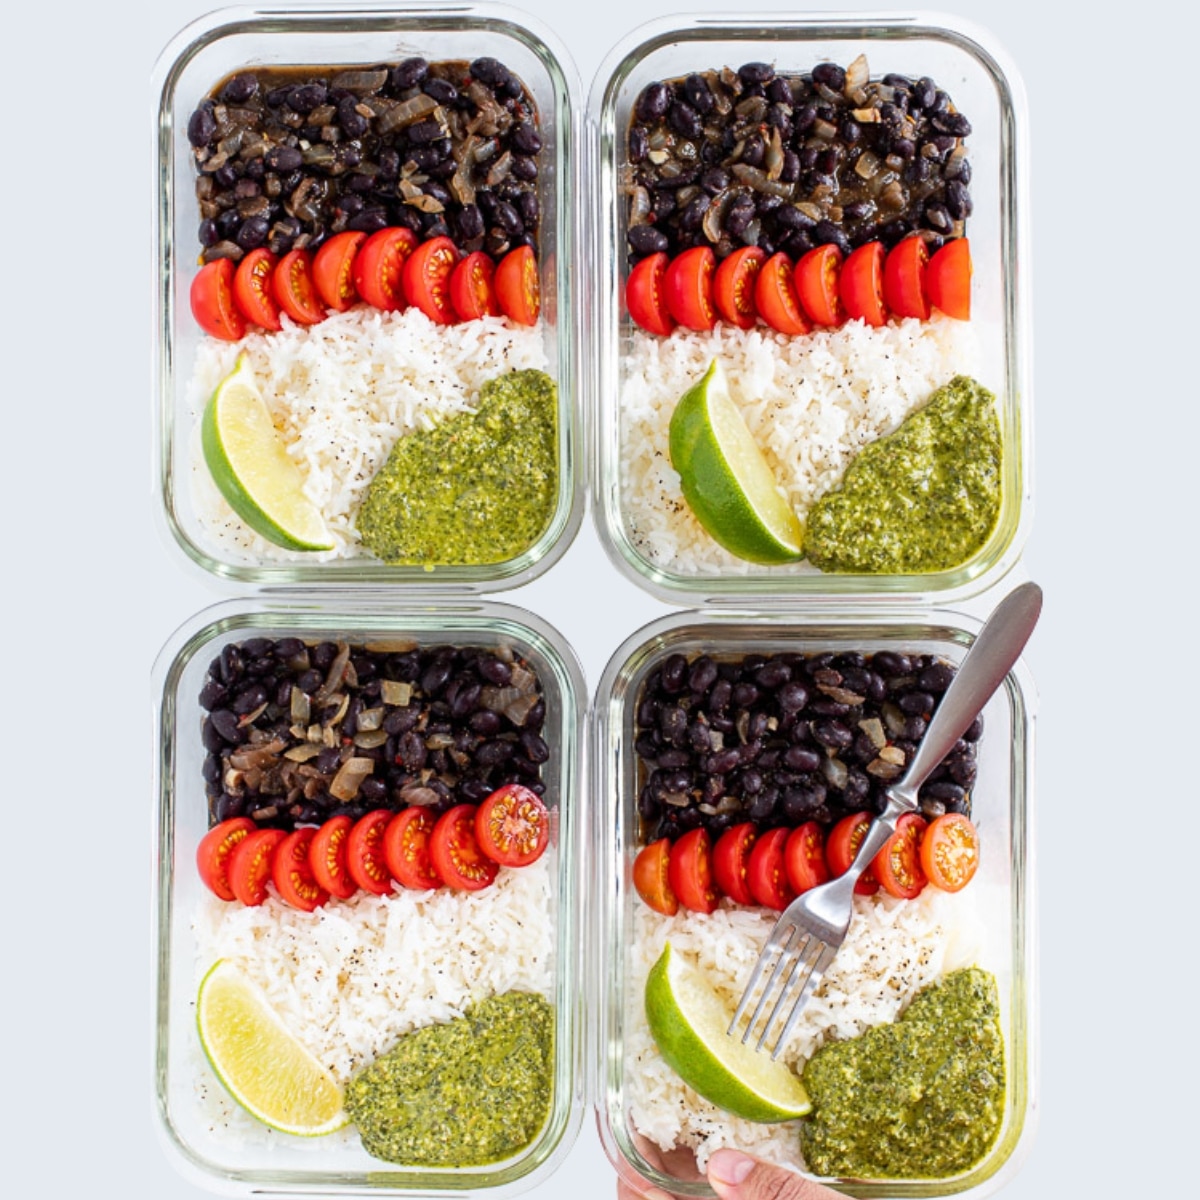 https://avirtualvegan.com/wp-content/uploads/2019/08/vegan-meal-prep-with-black-beans-rice-square.jpg